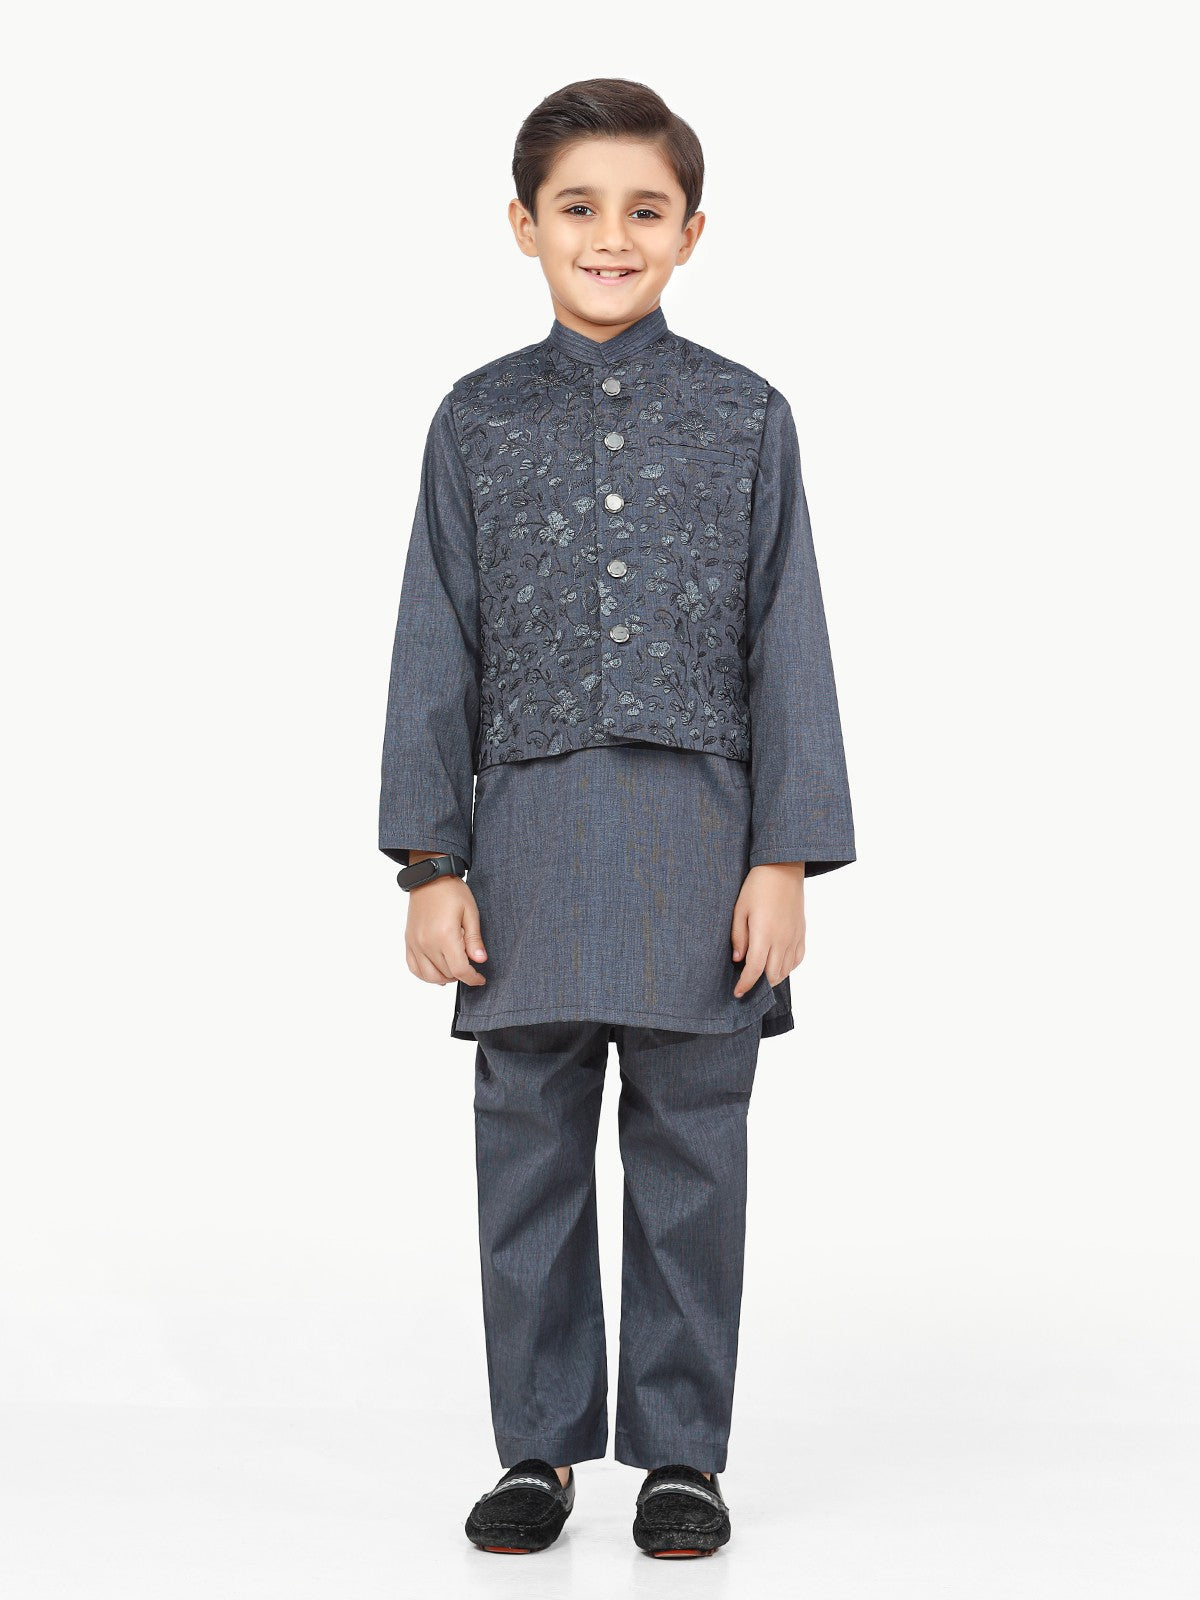 Boy's Indigo Waist Coat Suit - EBTWCSC22-011